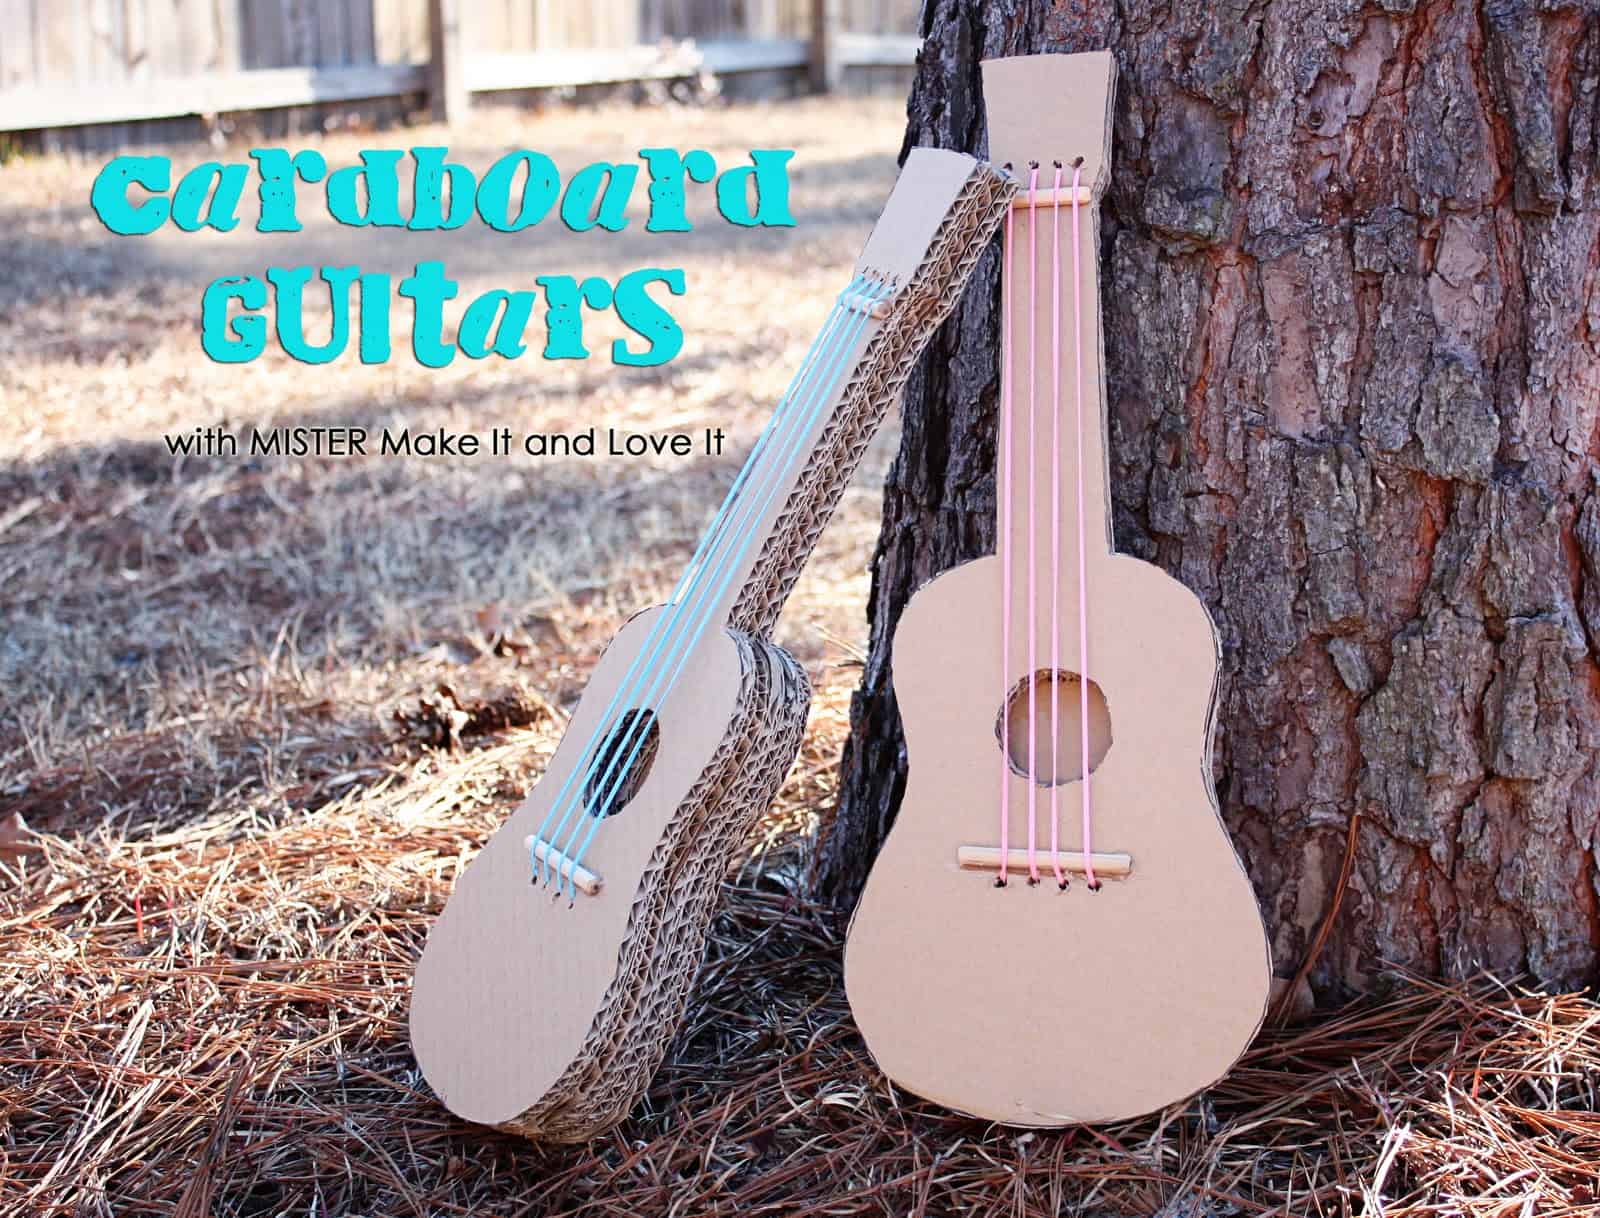 Cardboard and string guitars